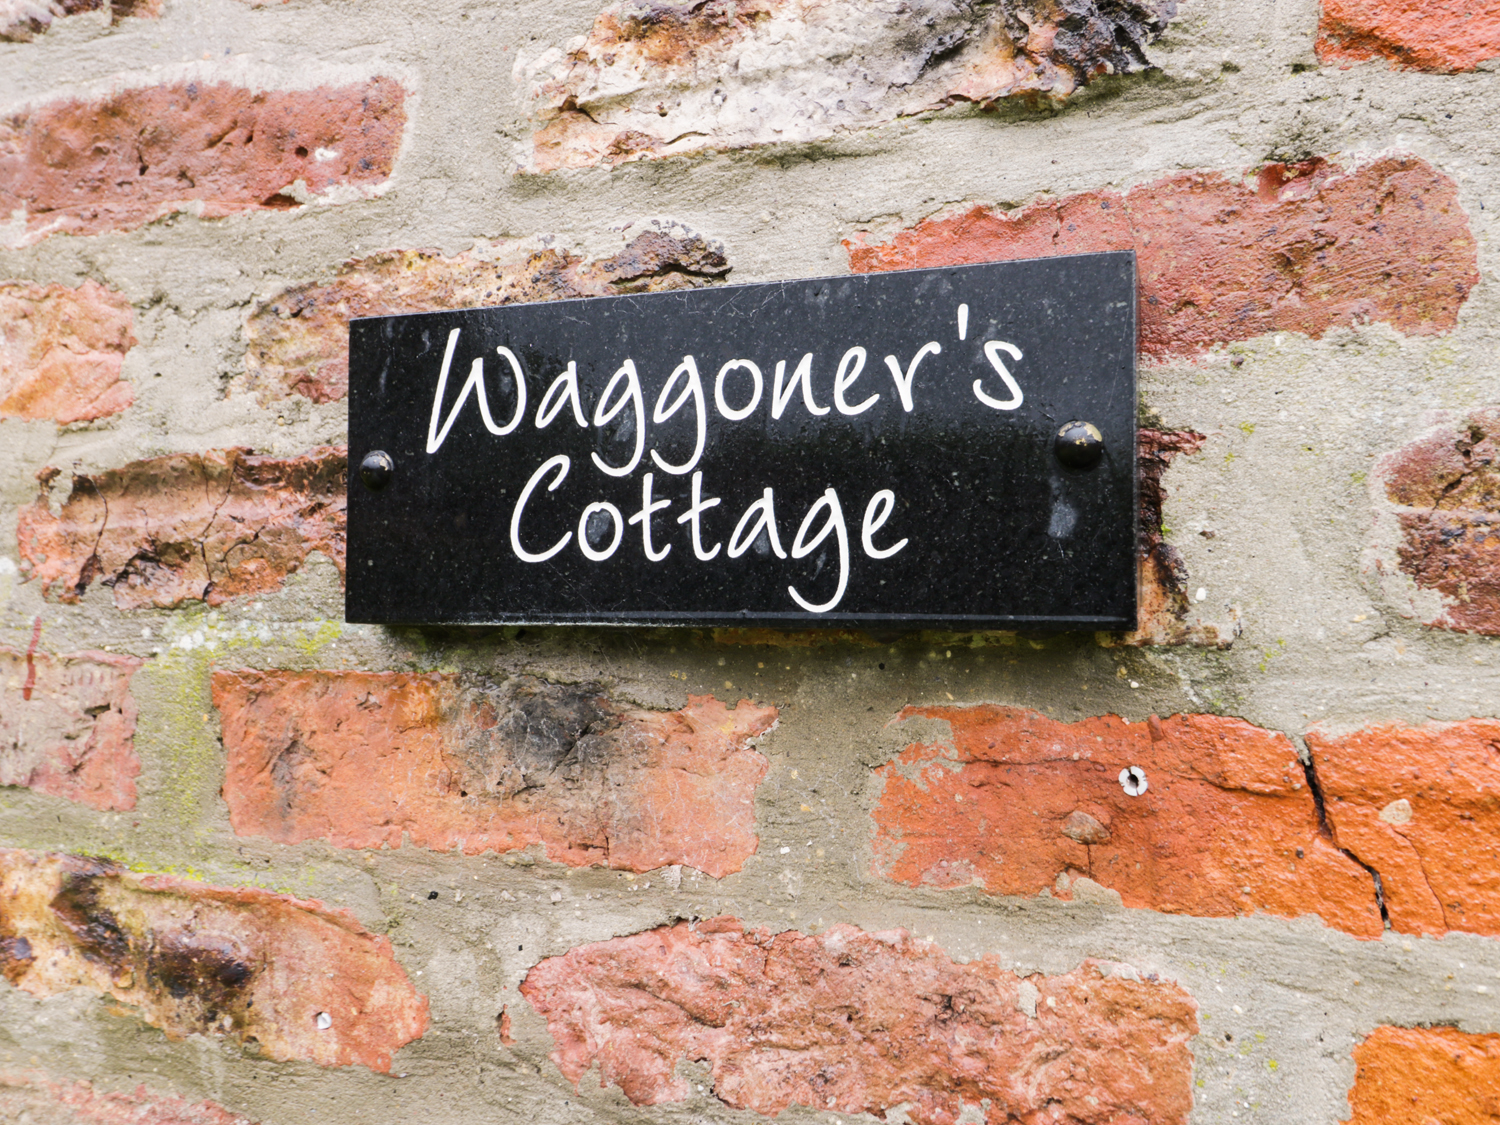 Waggoner's Cottage, North York Moors and Coast